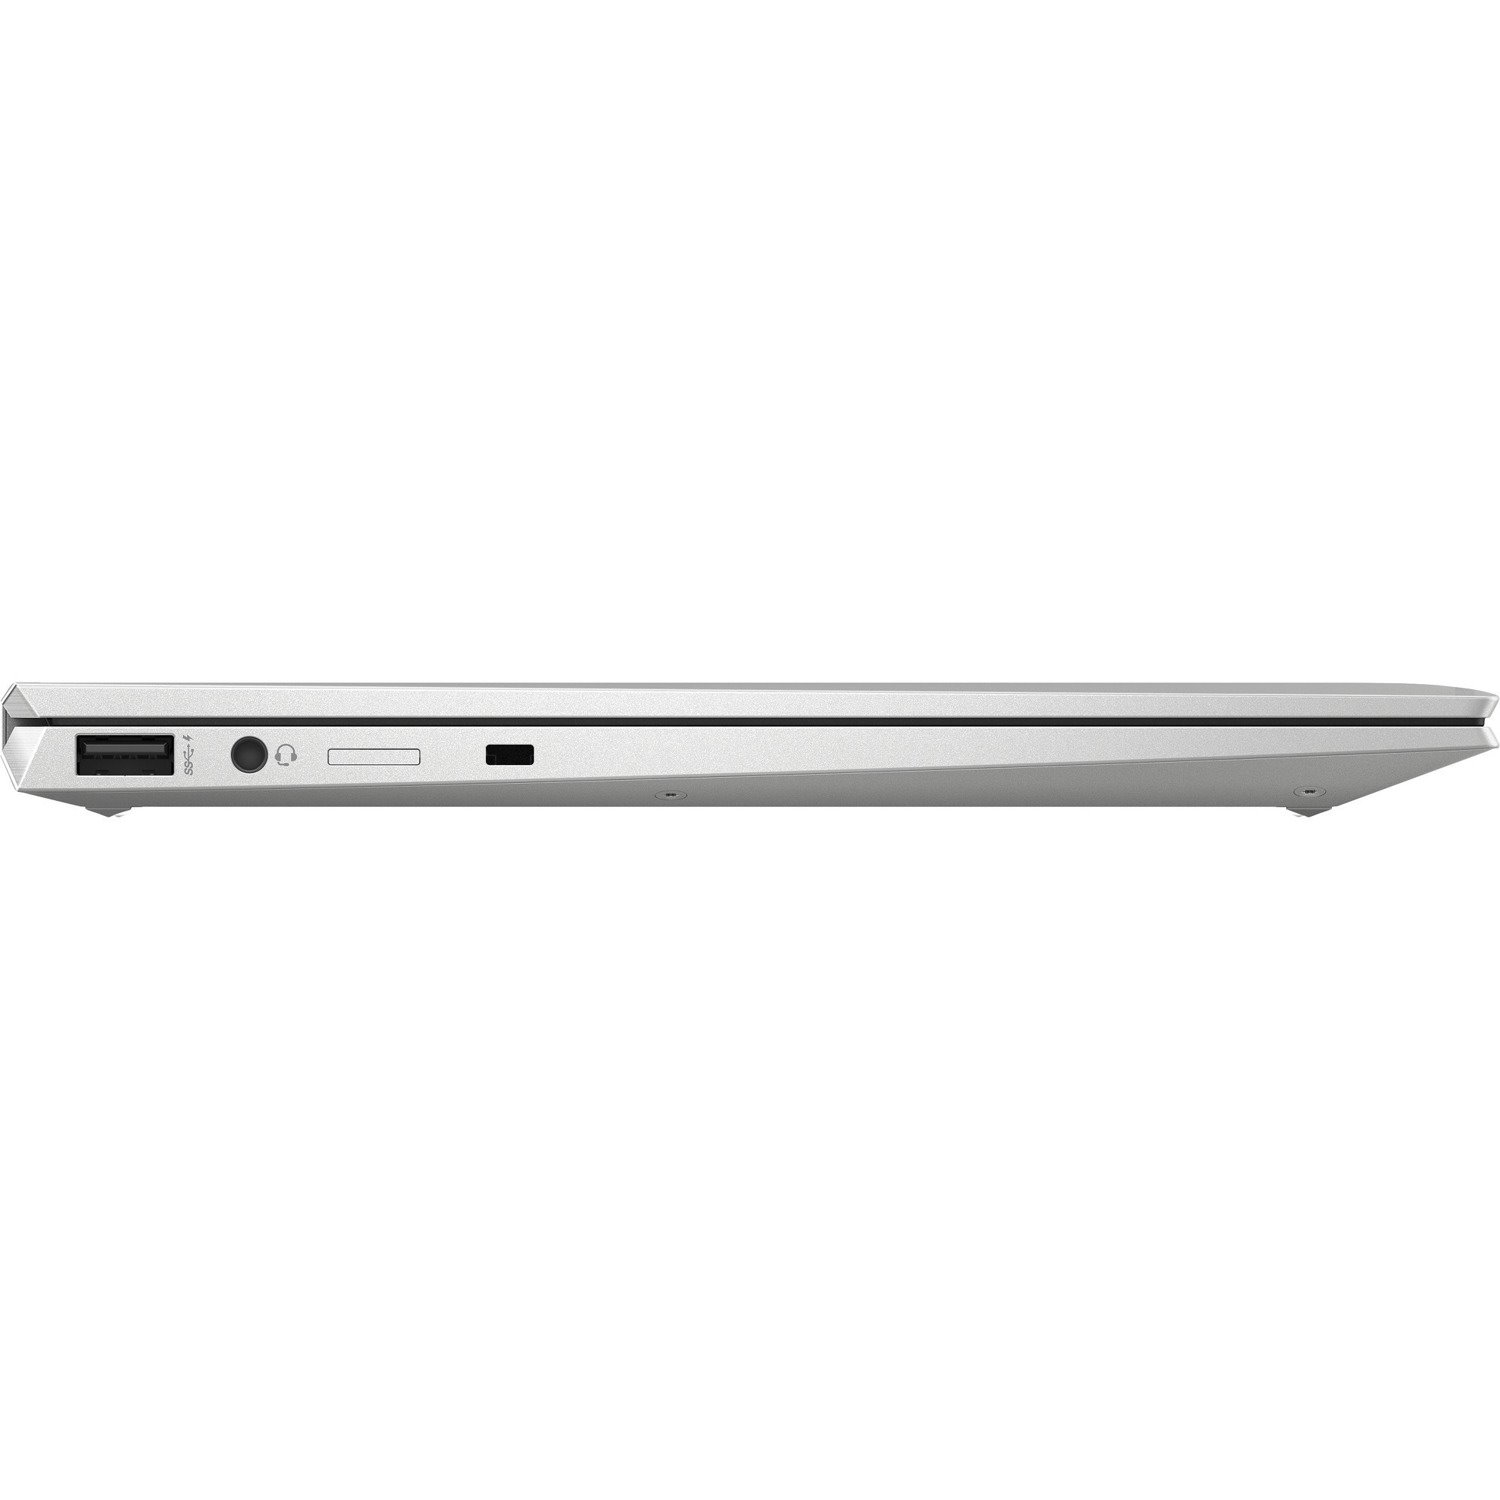 HP EliteBook x360 1040 G7 14" Touchscreen Convertible 2 in 1 Notebook - Intel Core i7 10th Gen i7-10810U - 16 GB - 256 GB SSD